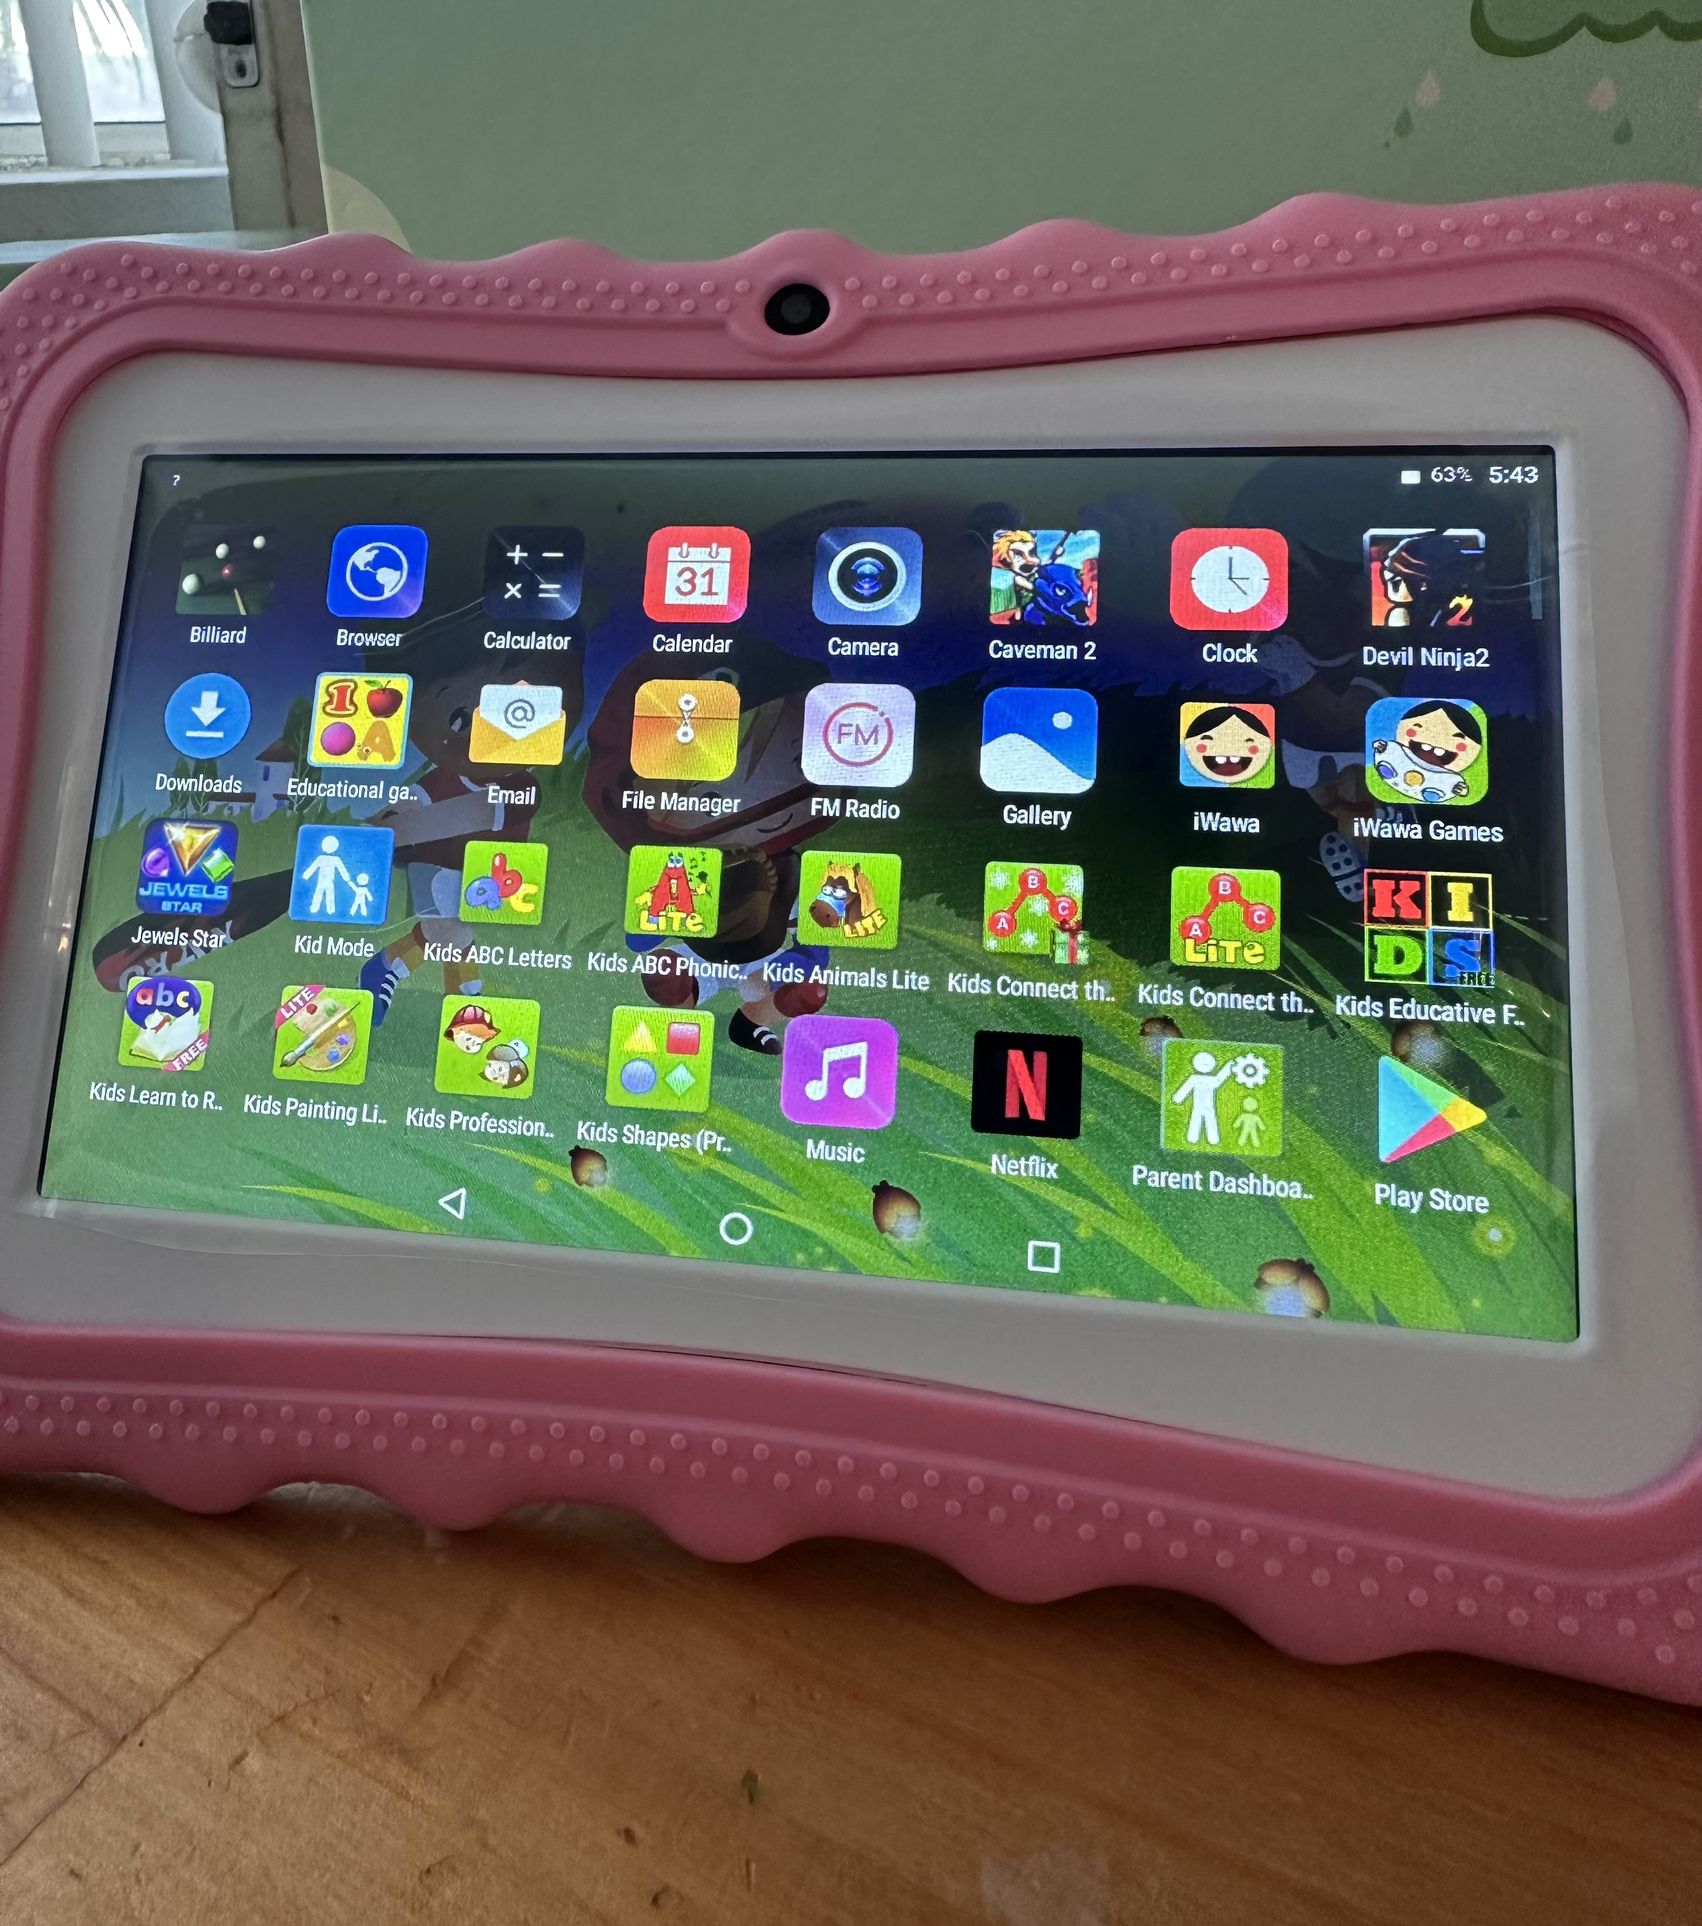 Children’s 7 Inch Tablet 16gb Storage Dual Camera